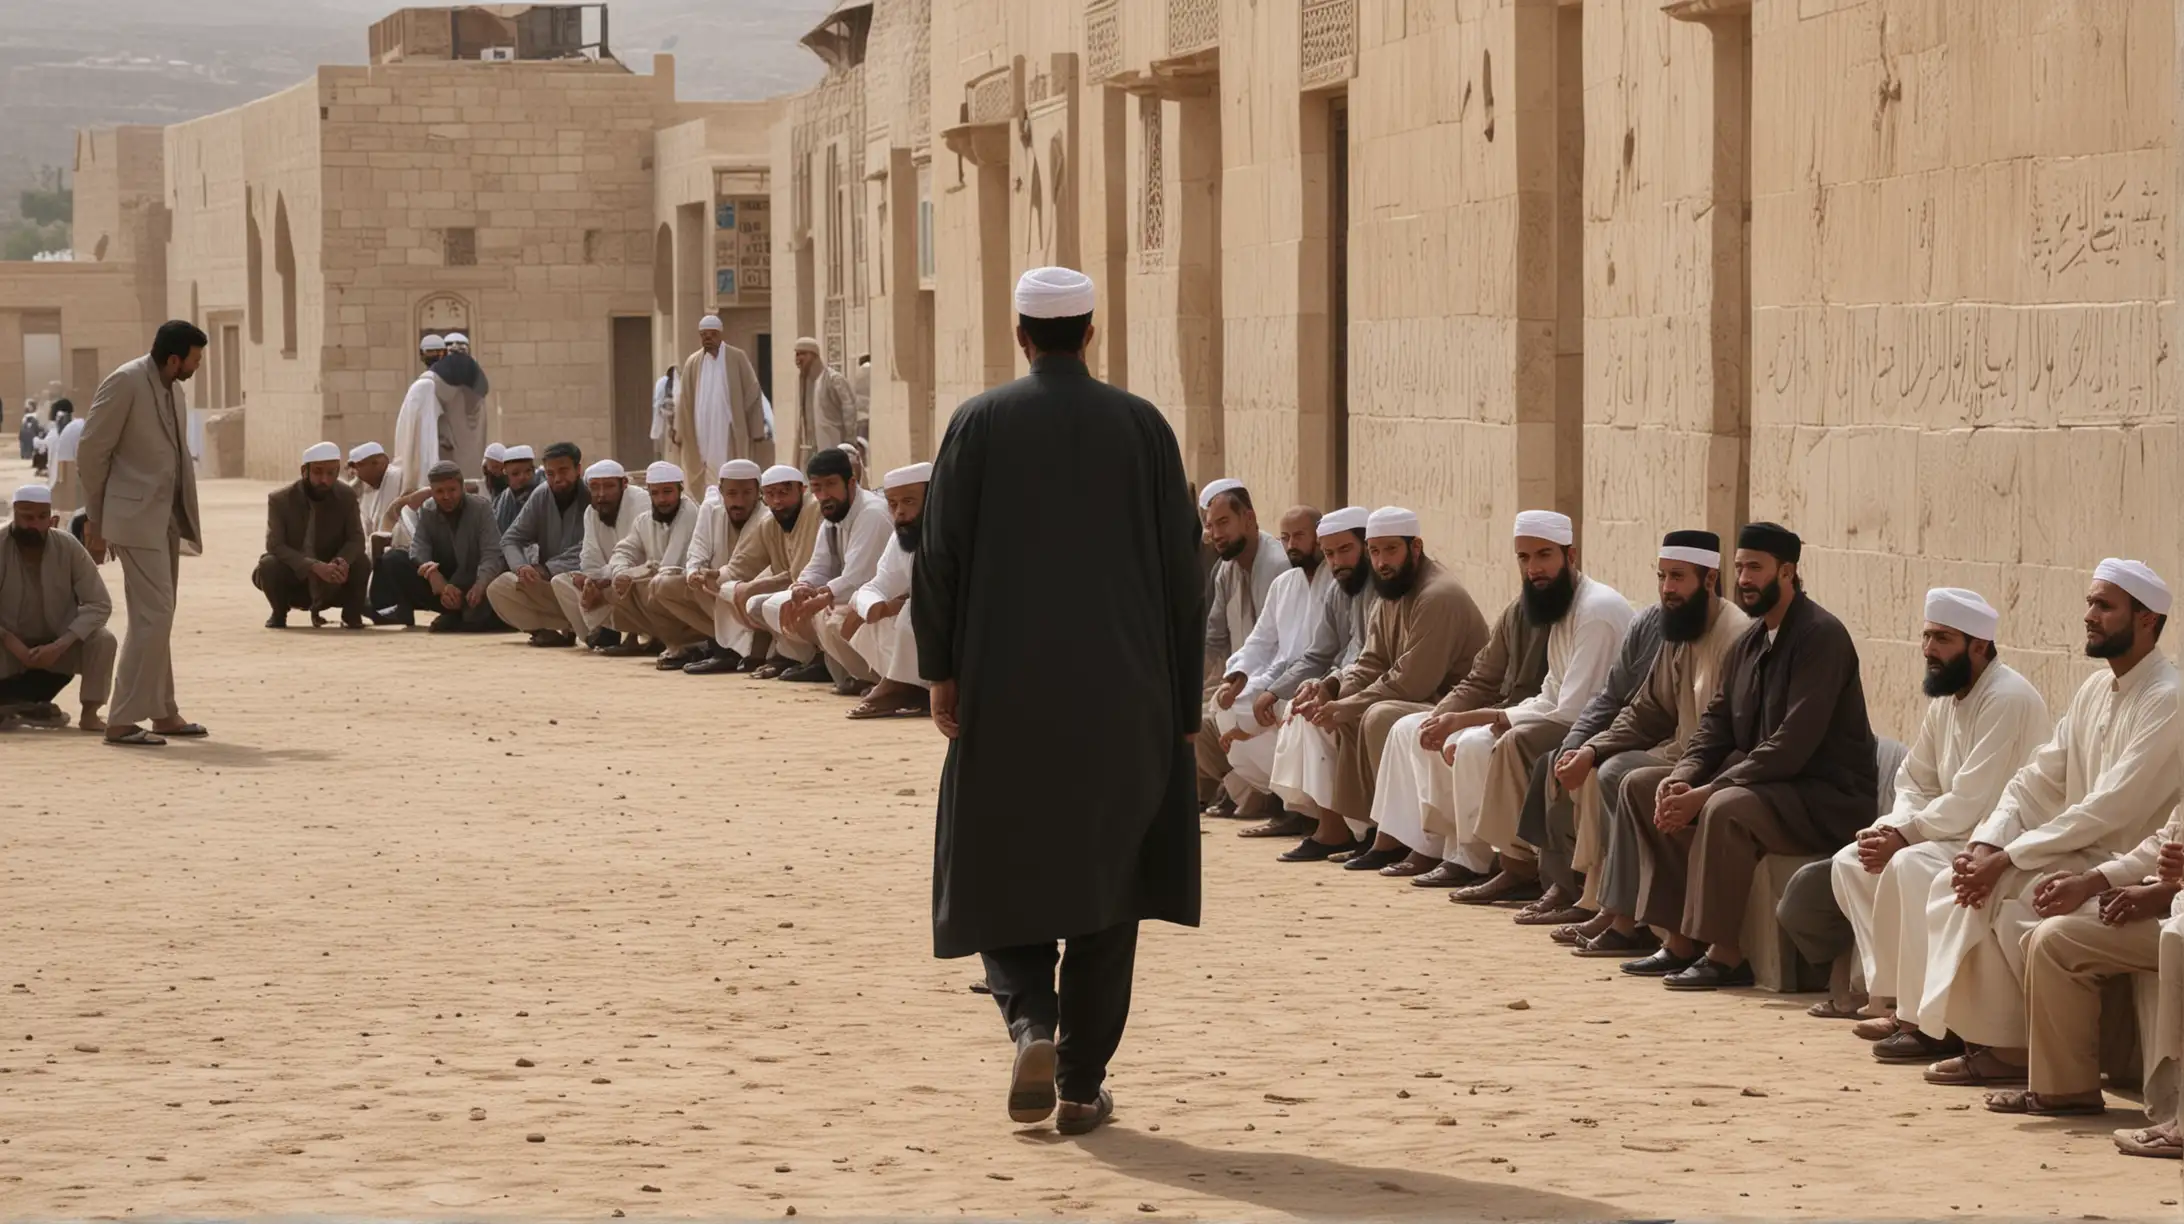 Muslim Man Walking Towards Group of Men in Discussion